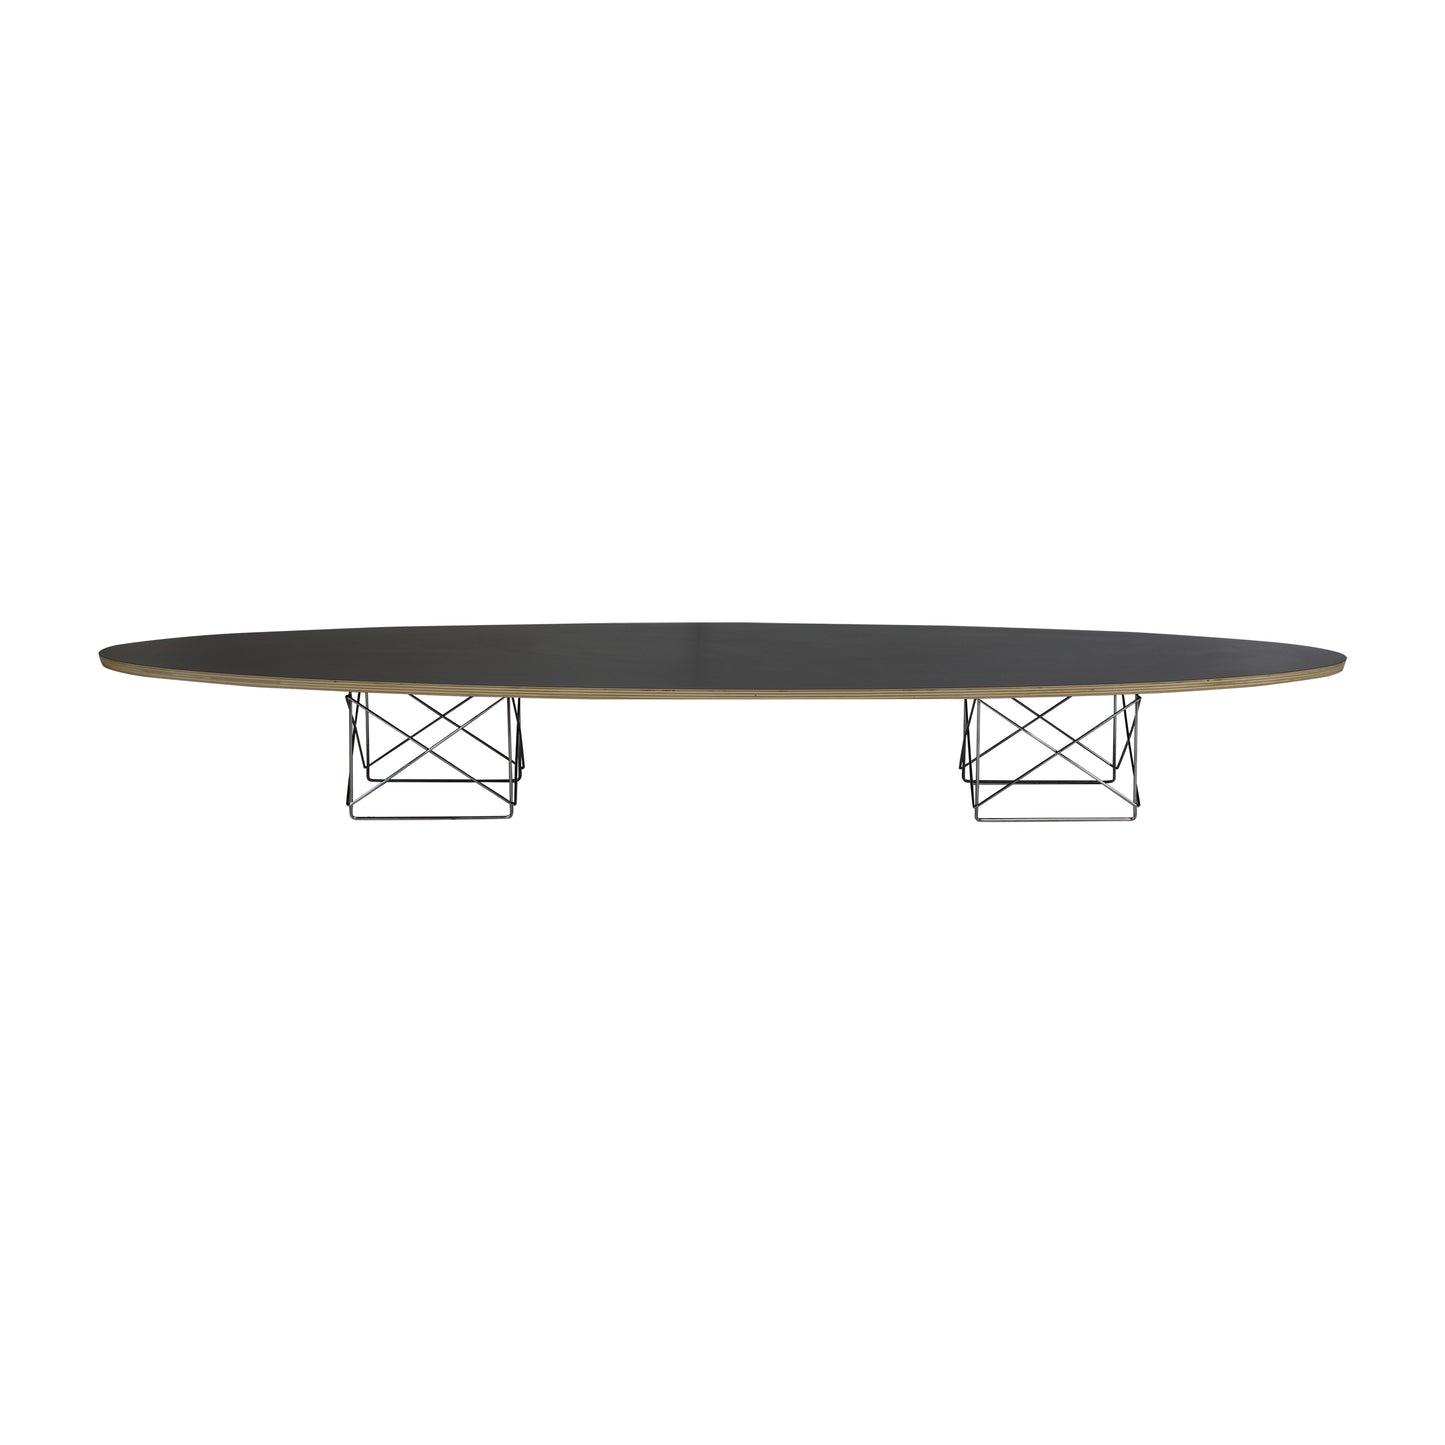 Eames style elliptical table